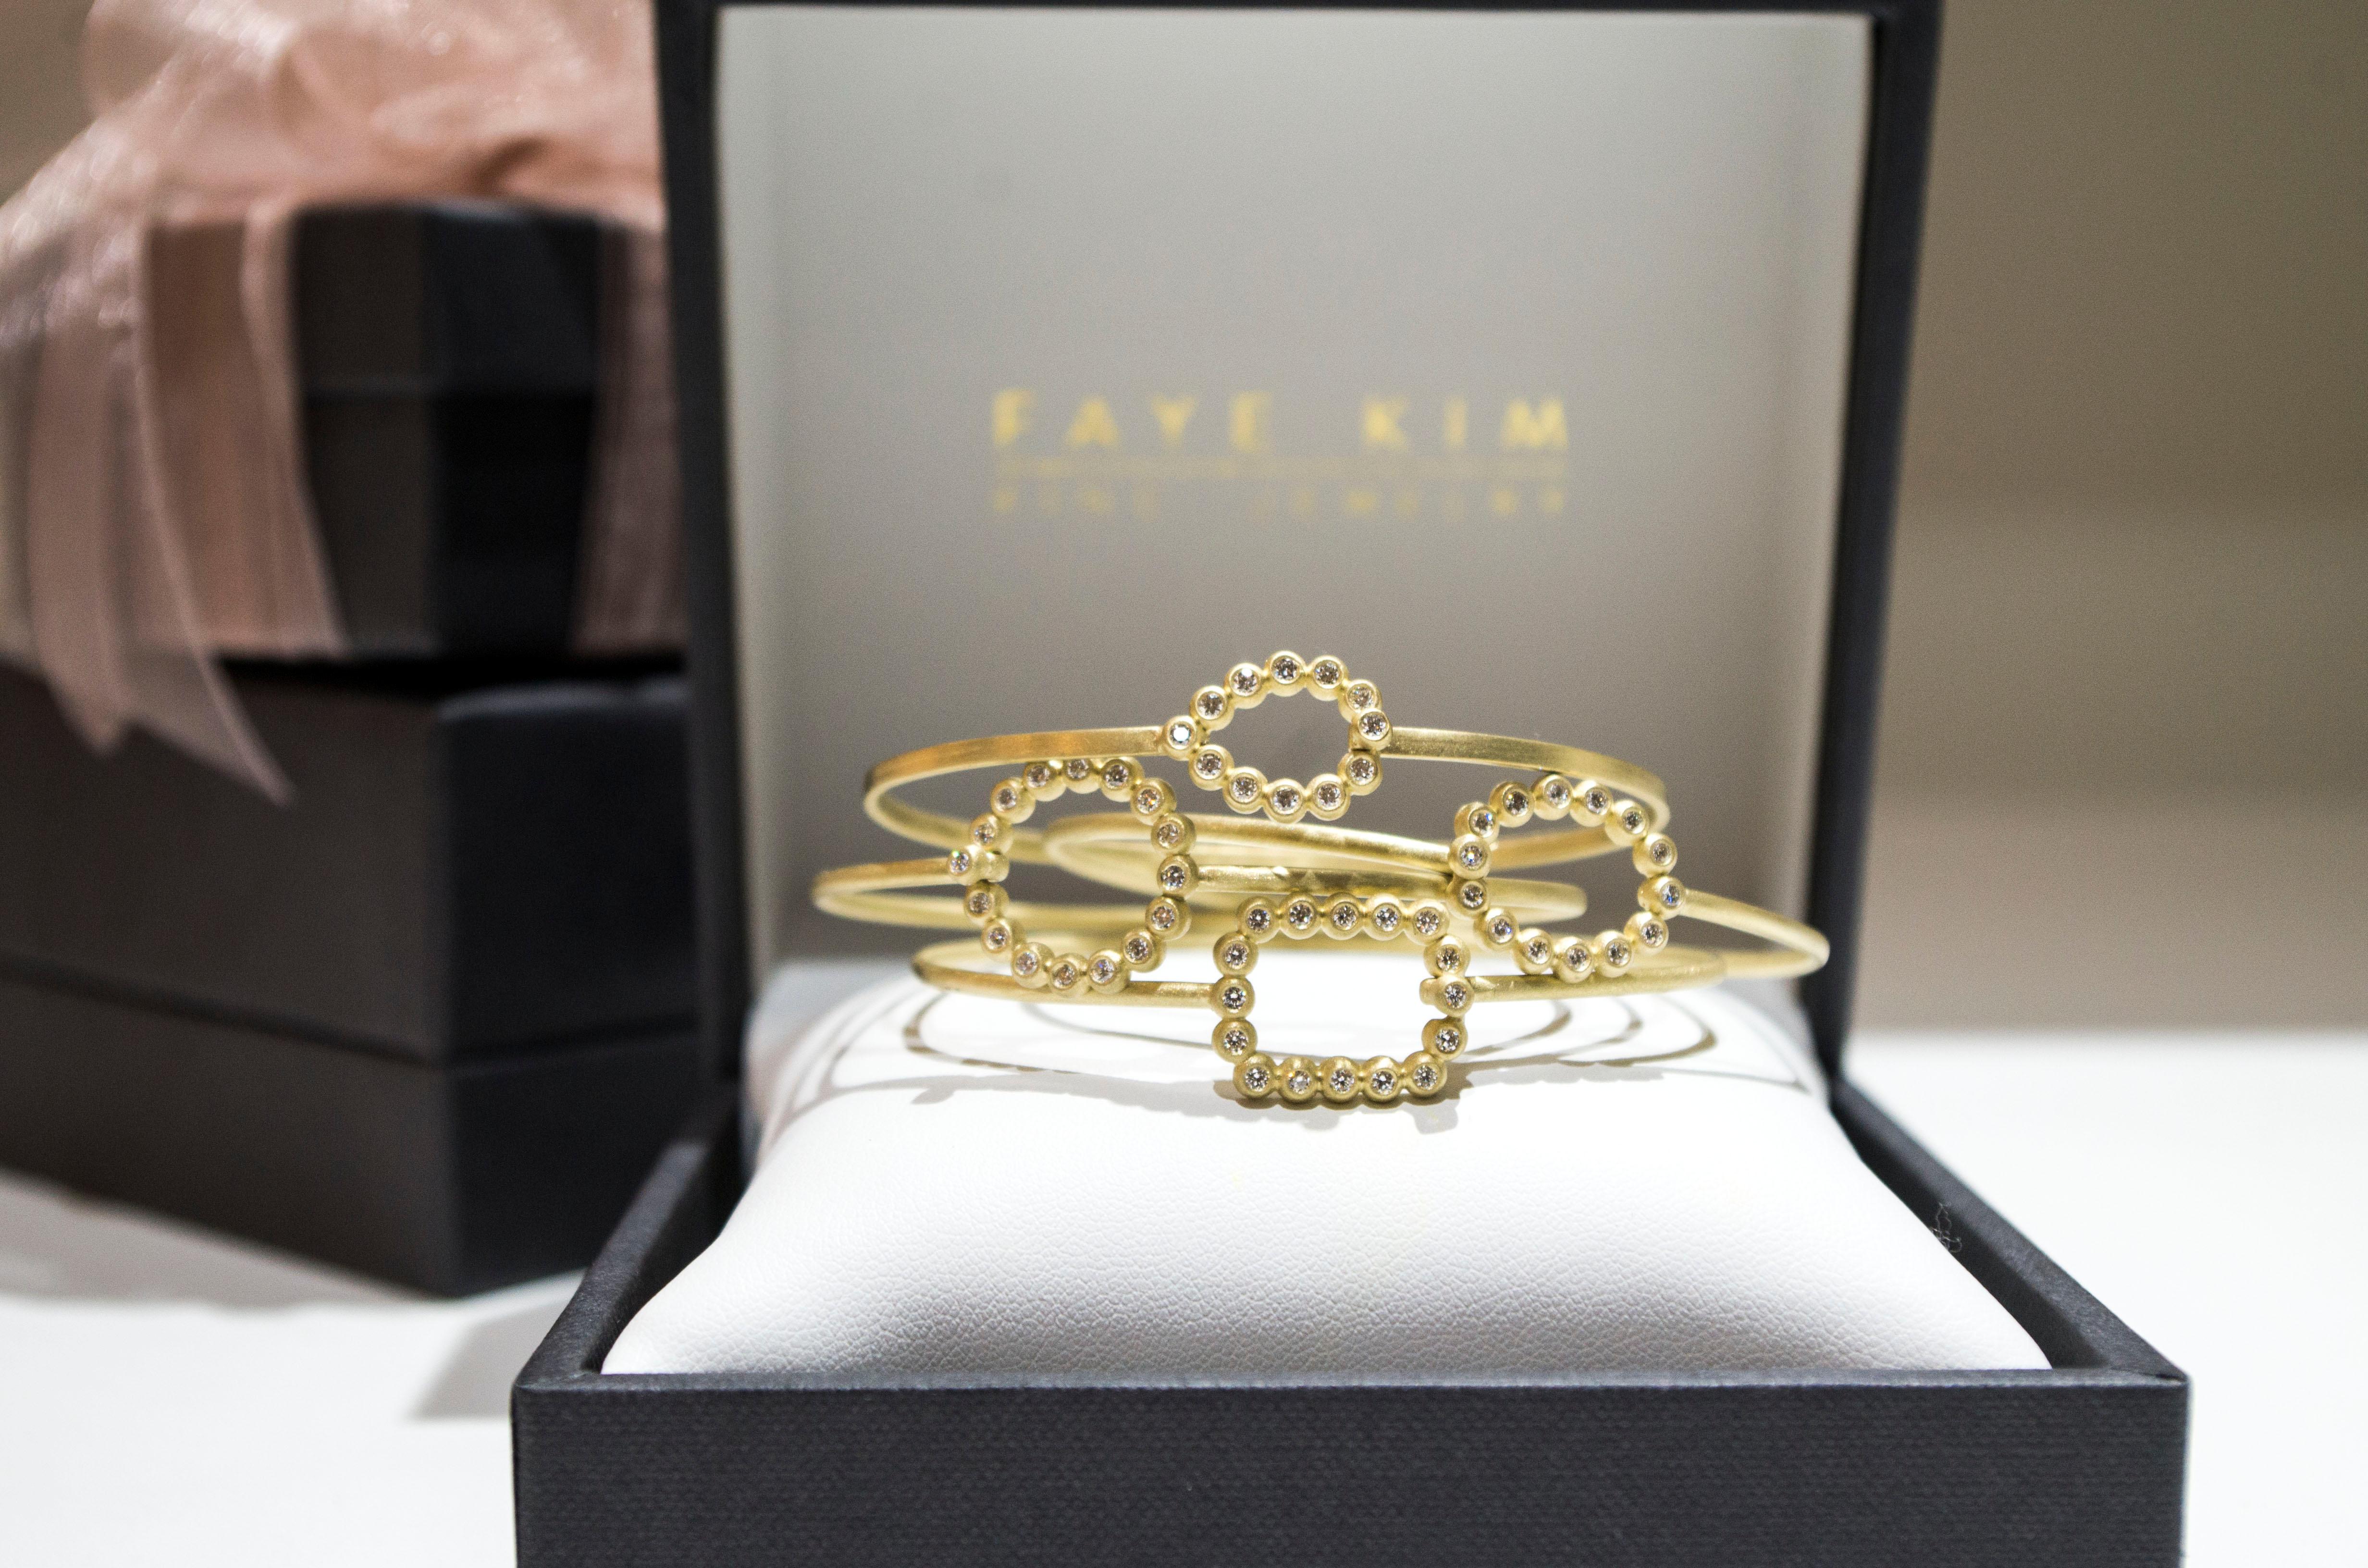 Women's Faye Kim 18 Karat Gold Bangle with Cushion Diamond Motif Closure For Sale